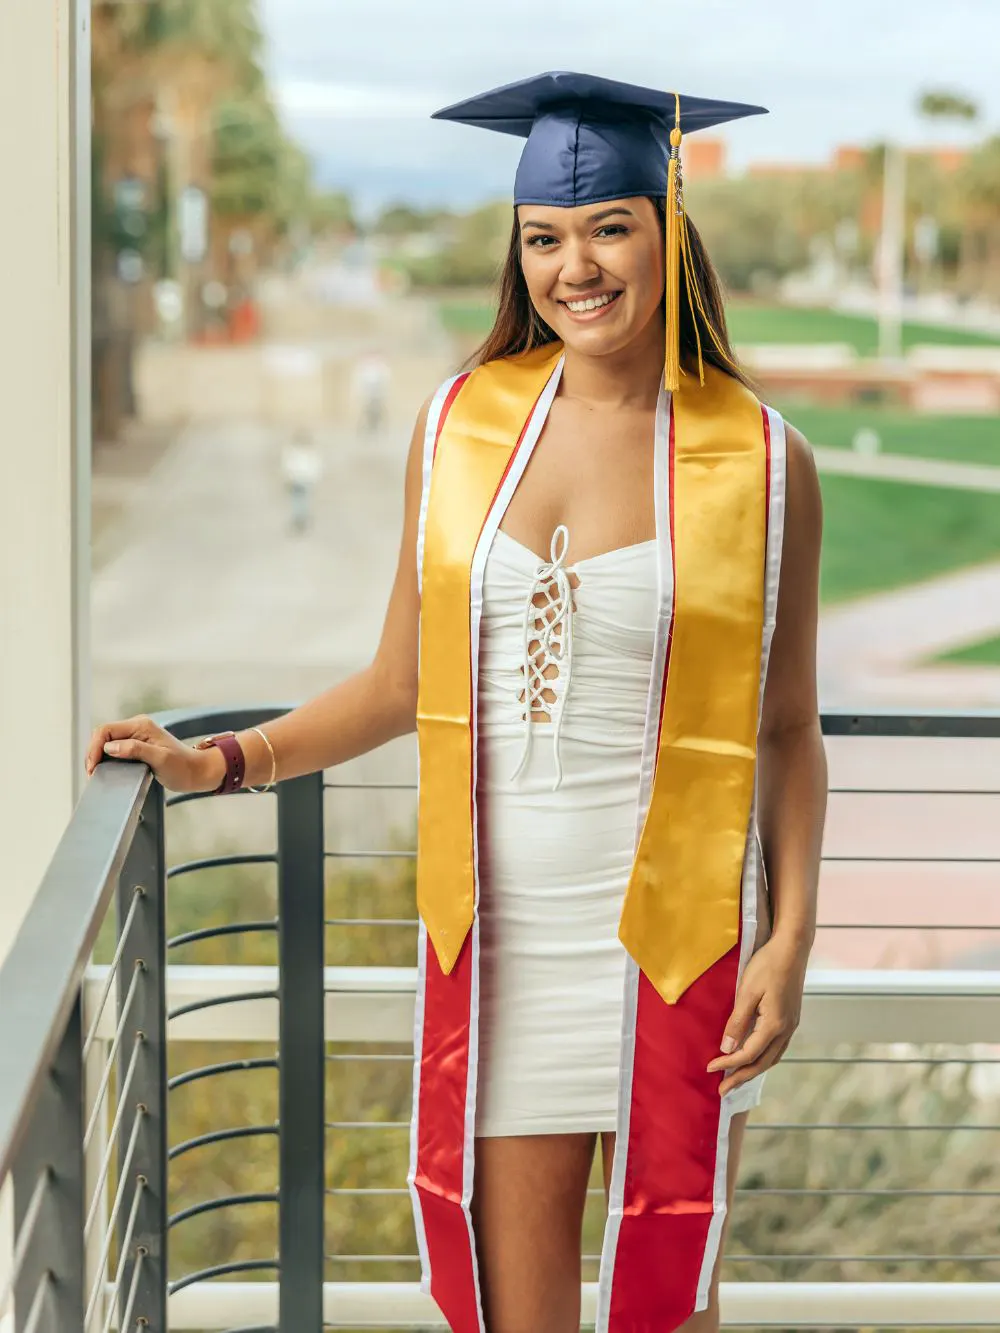 Girl wearing a white dress on graduation